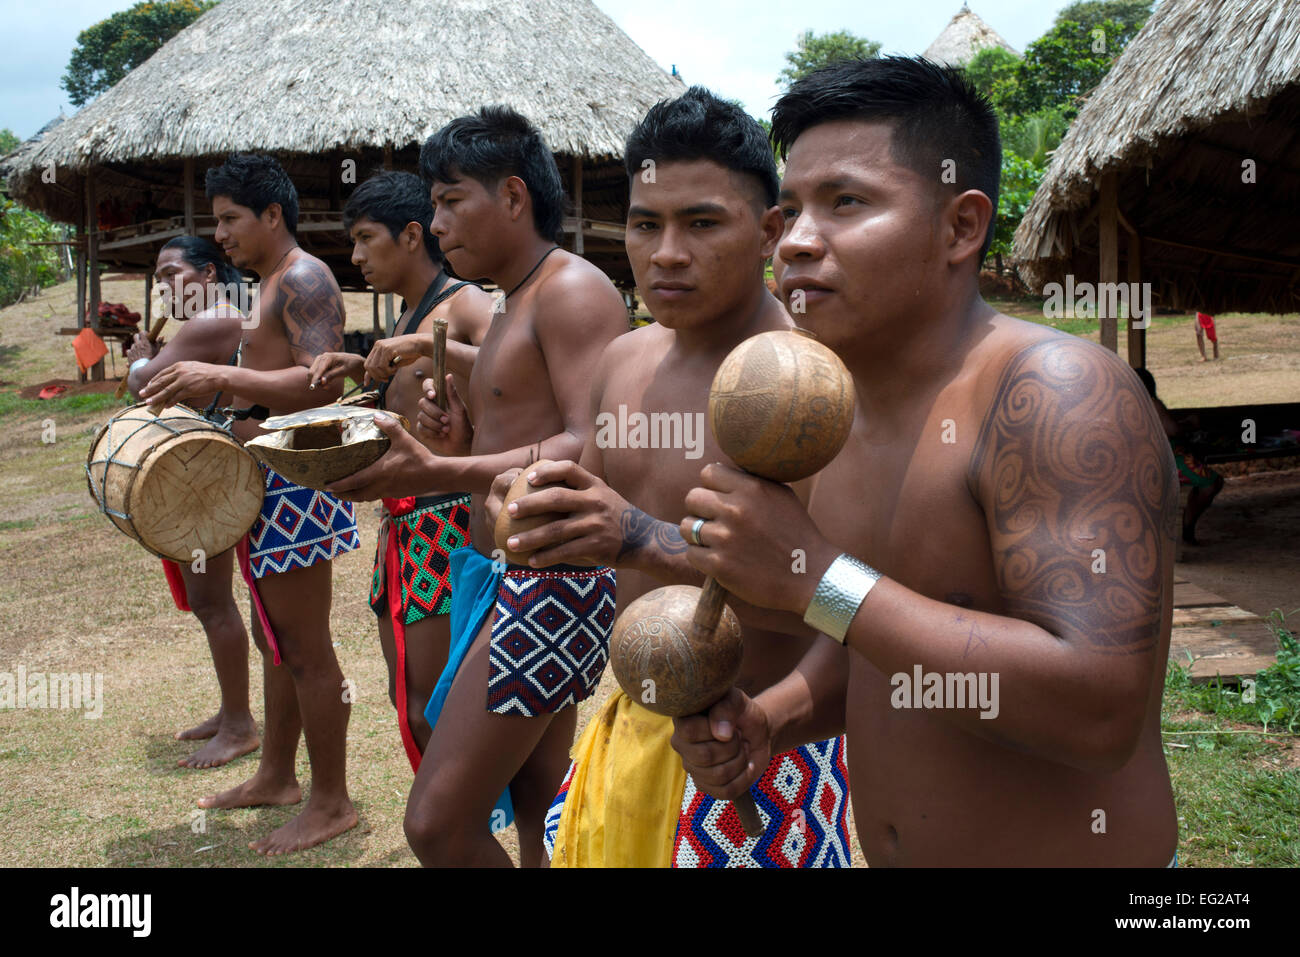 Music and dancing in the village of the Native Indian Embera Tribe, Embera Village, Panama. Panama Embera people Indian Village Stock Photo